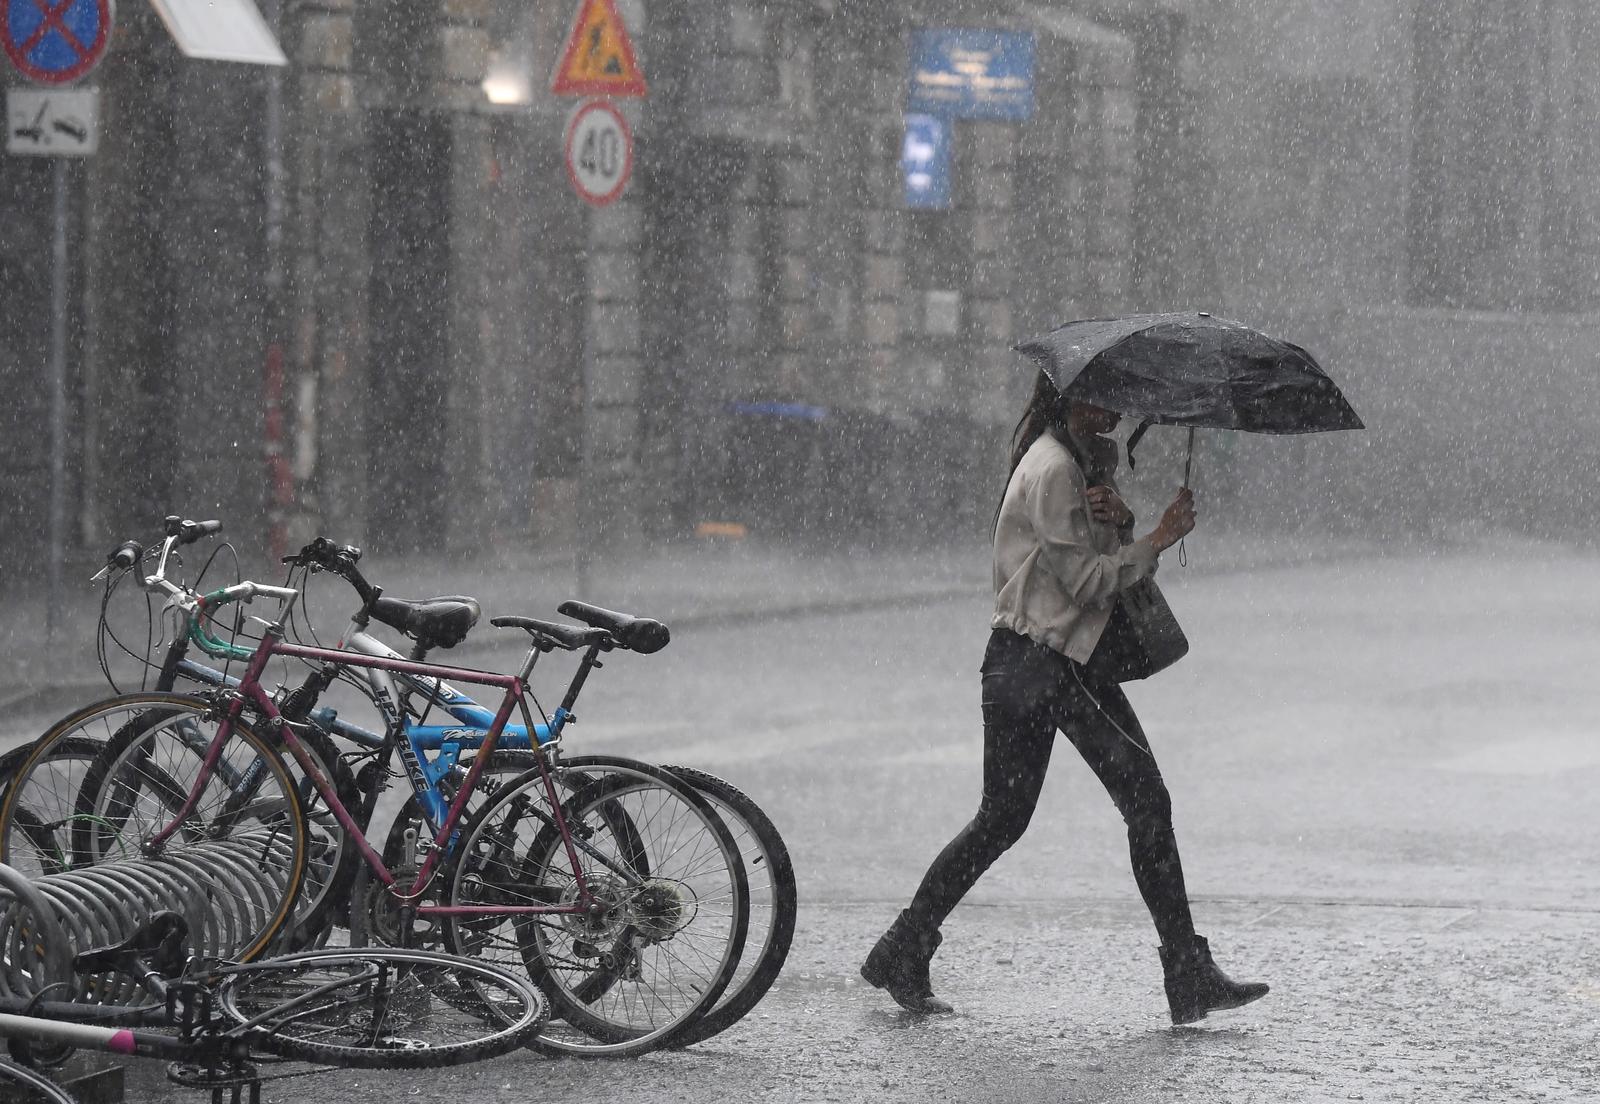 22.06.2019., Zagreb - Oko 16 sati Zagreb je zahvatilo olujno nevrijeme praceno obilnom kisom i grmljavinom. Photo: Marko Lukunic/PIXSELL